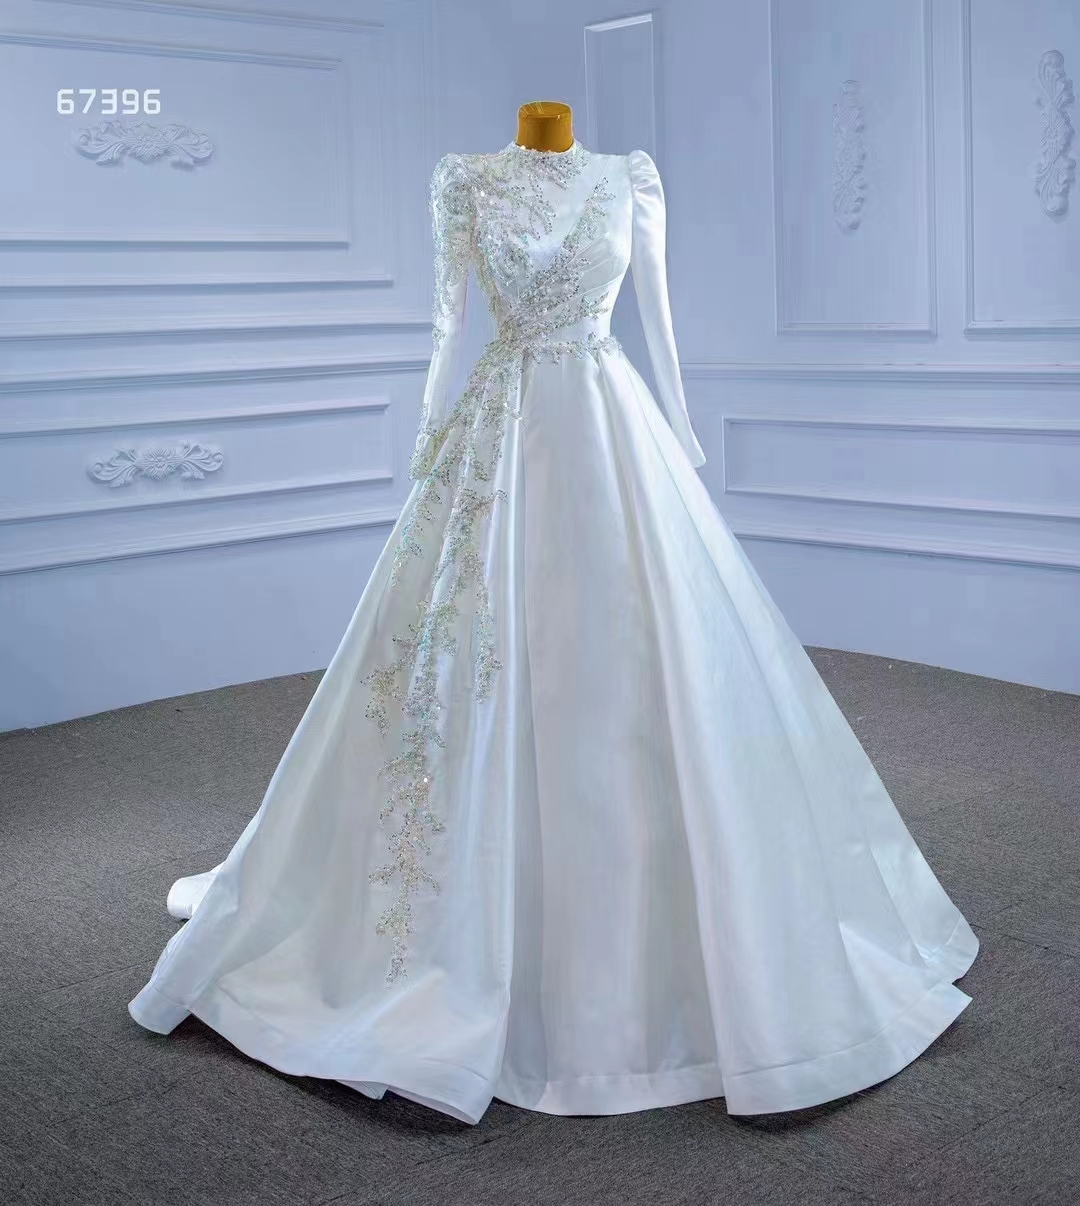 luxo branco de manga comprida no pescoço pérolas de renda de lacas de noiva vestido de noiva sm67396